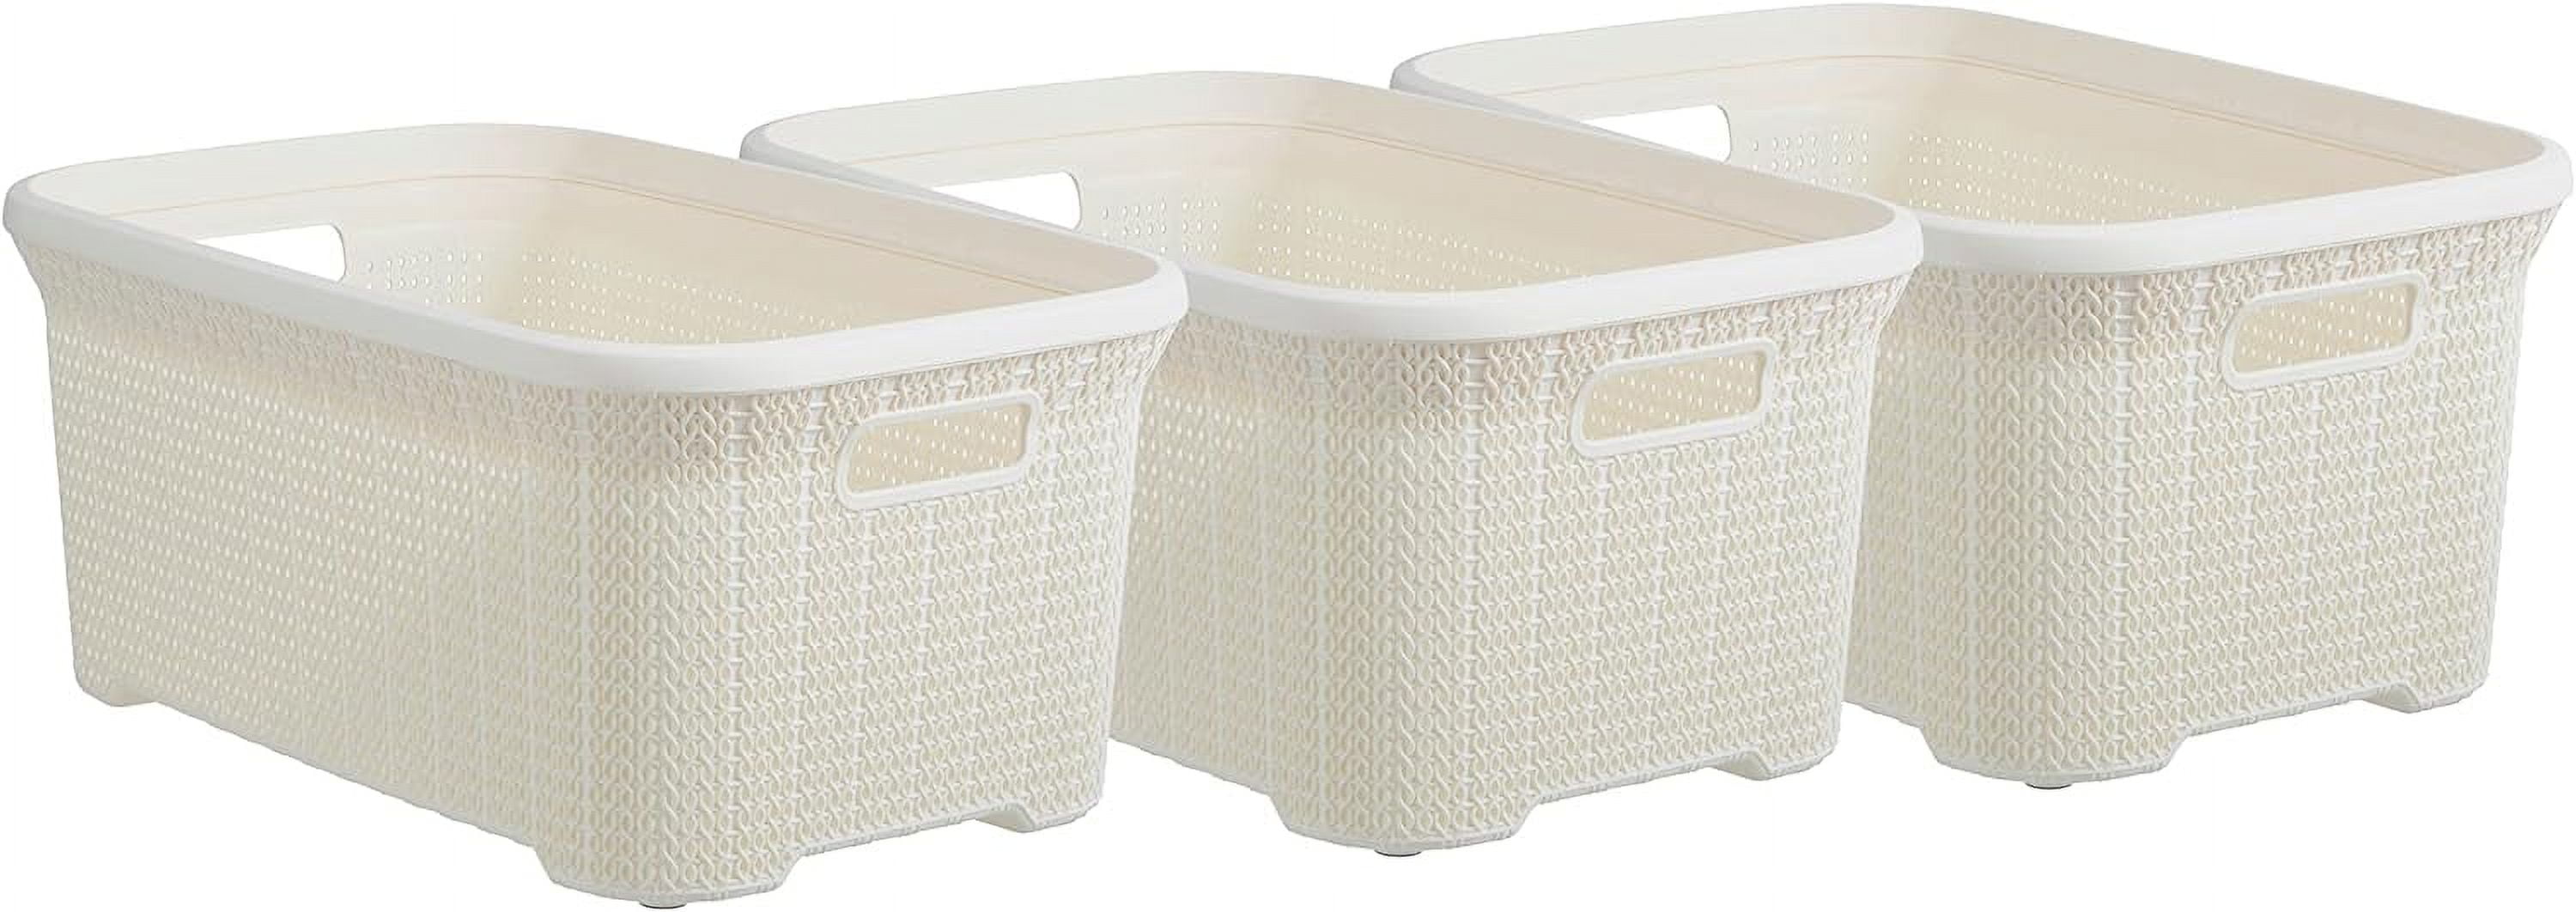 Plastic Laundry Basket Small Storage Hamper Basket, 3 Pack Cream Cloths ...